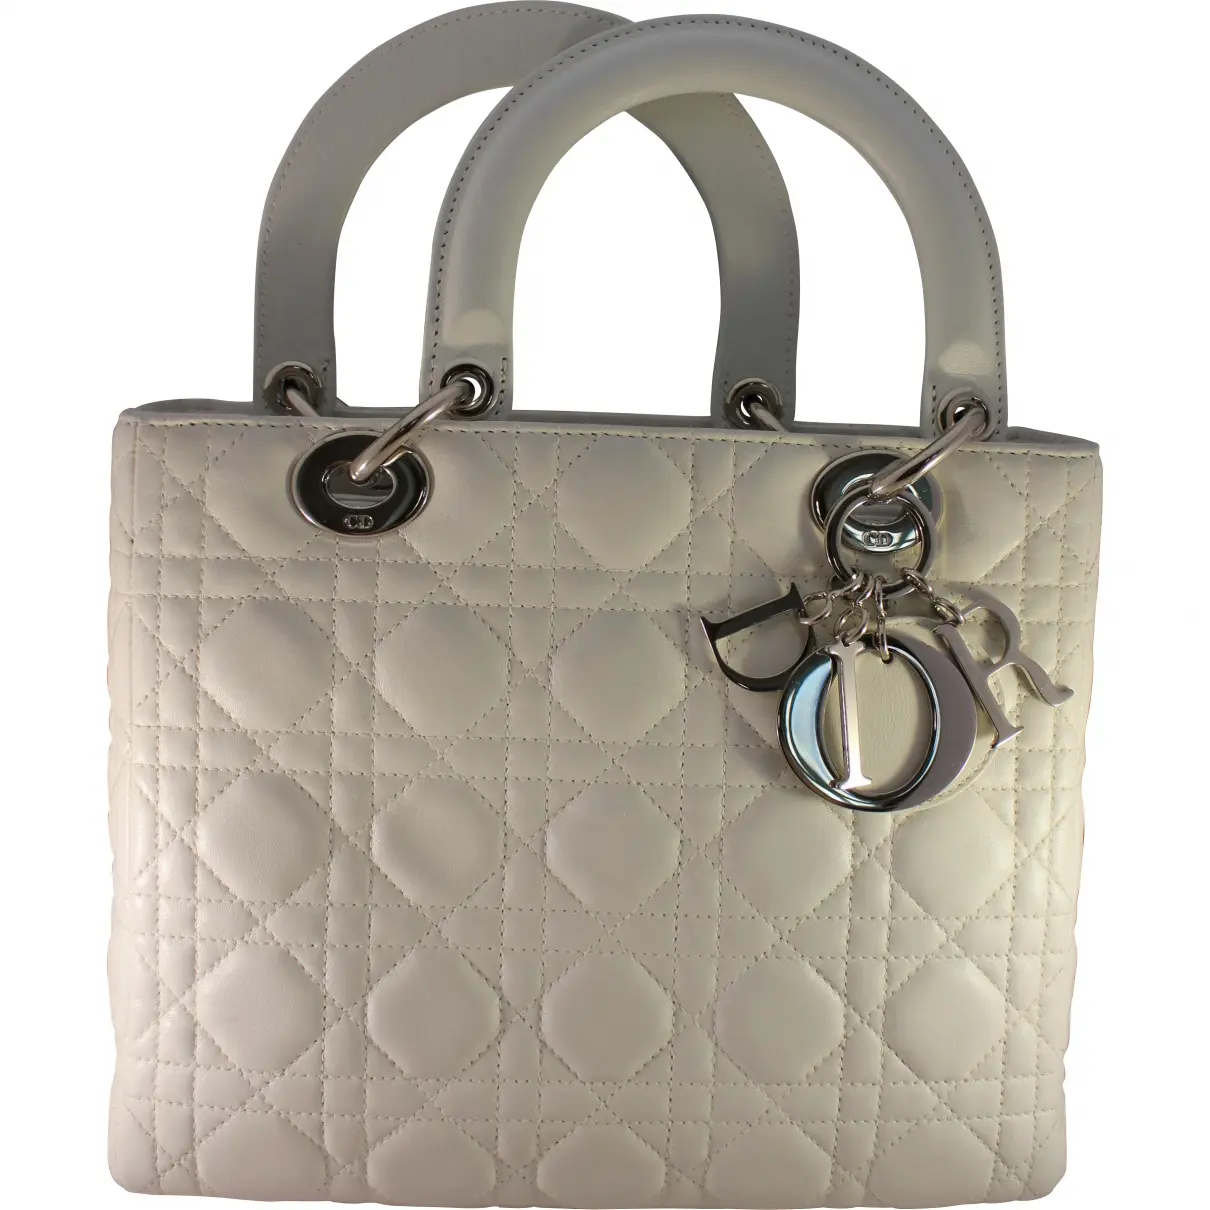 White Leather Handbag Christian Dior